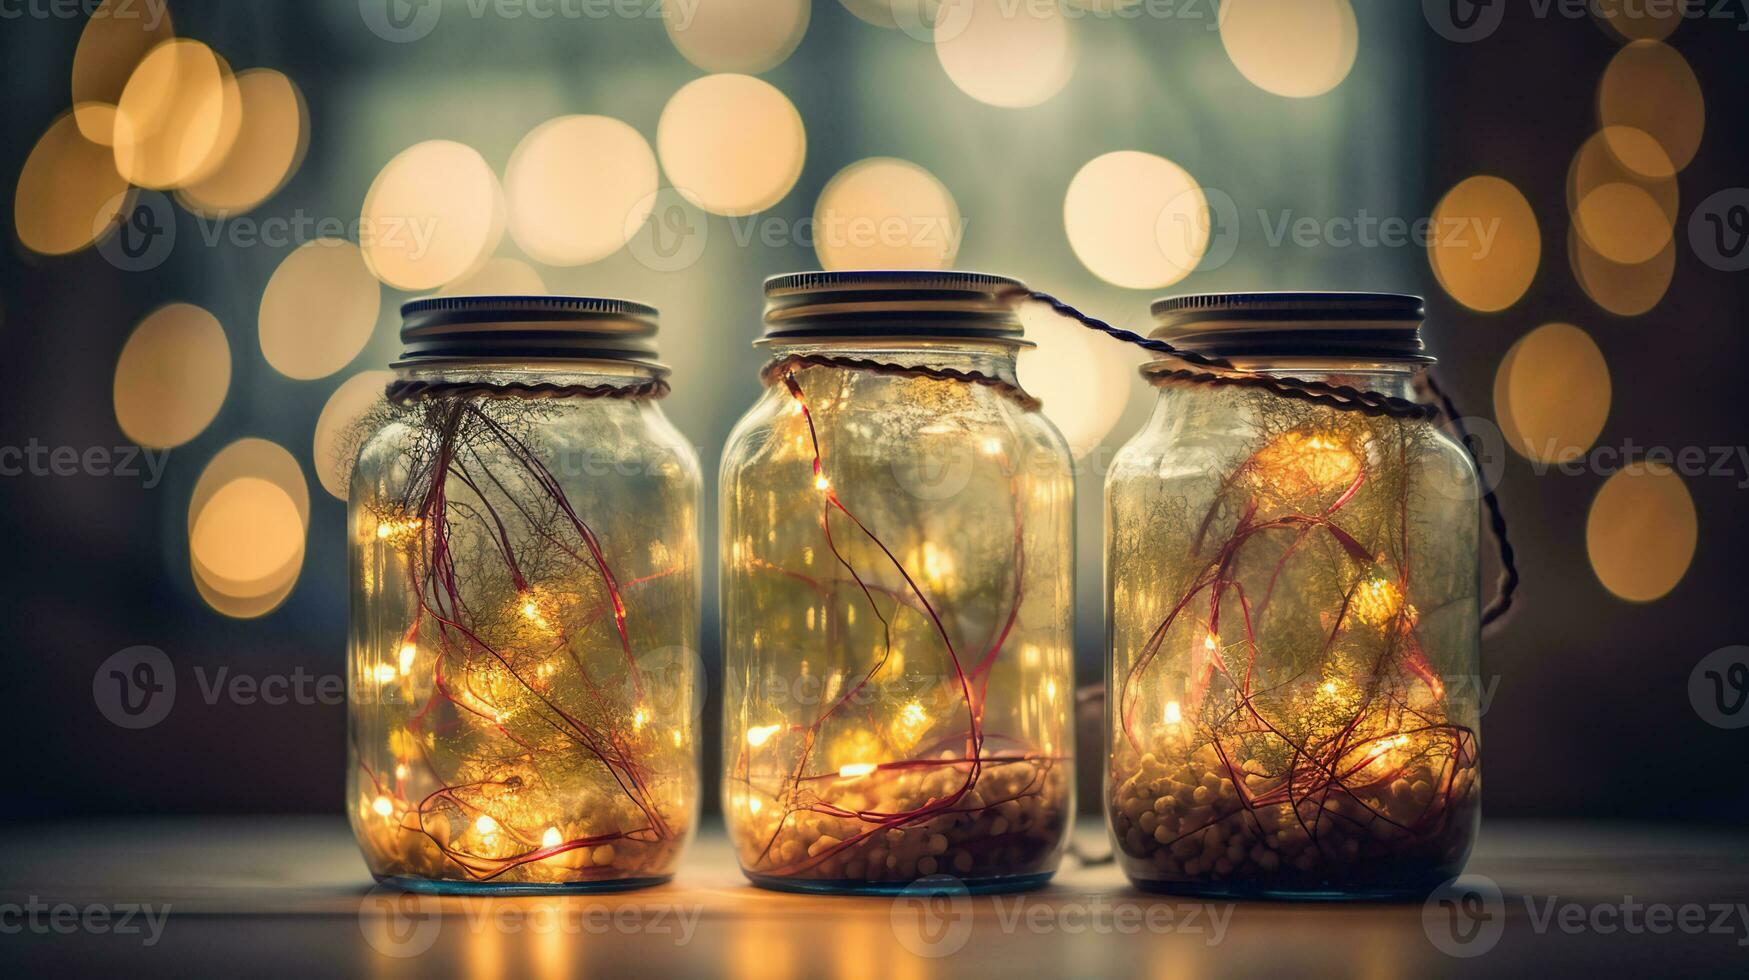 Christmas lights in a jars photo - Fairy lights